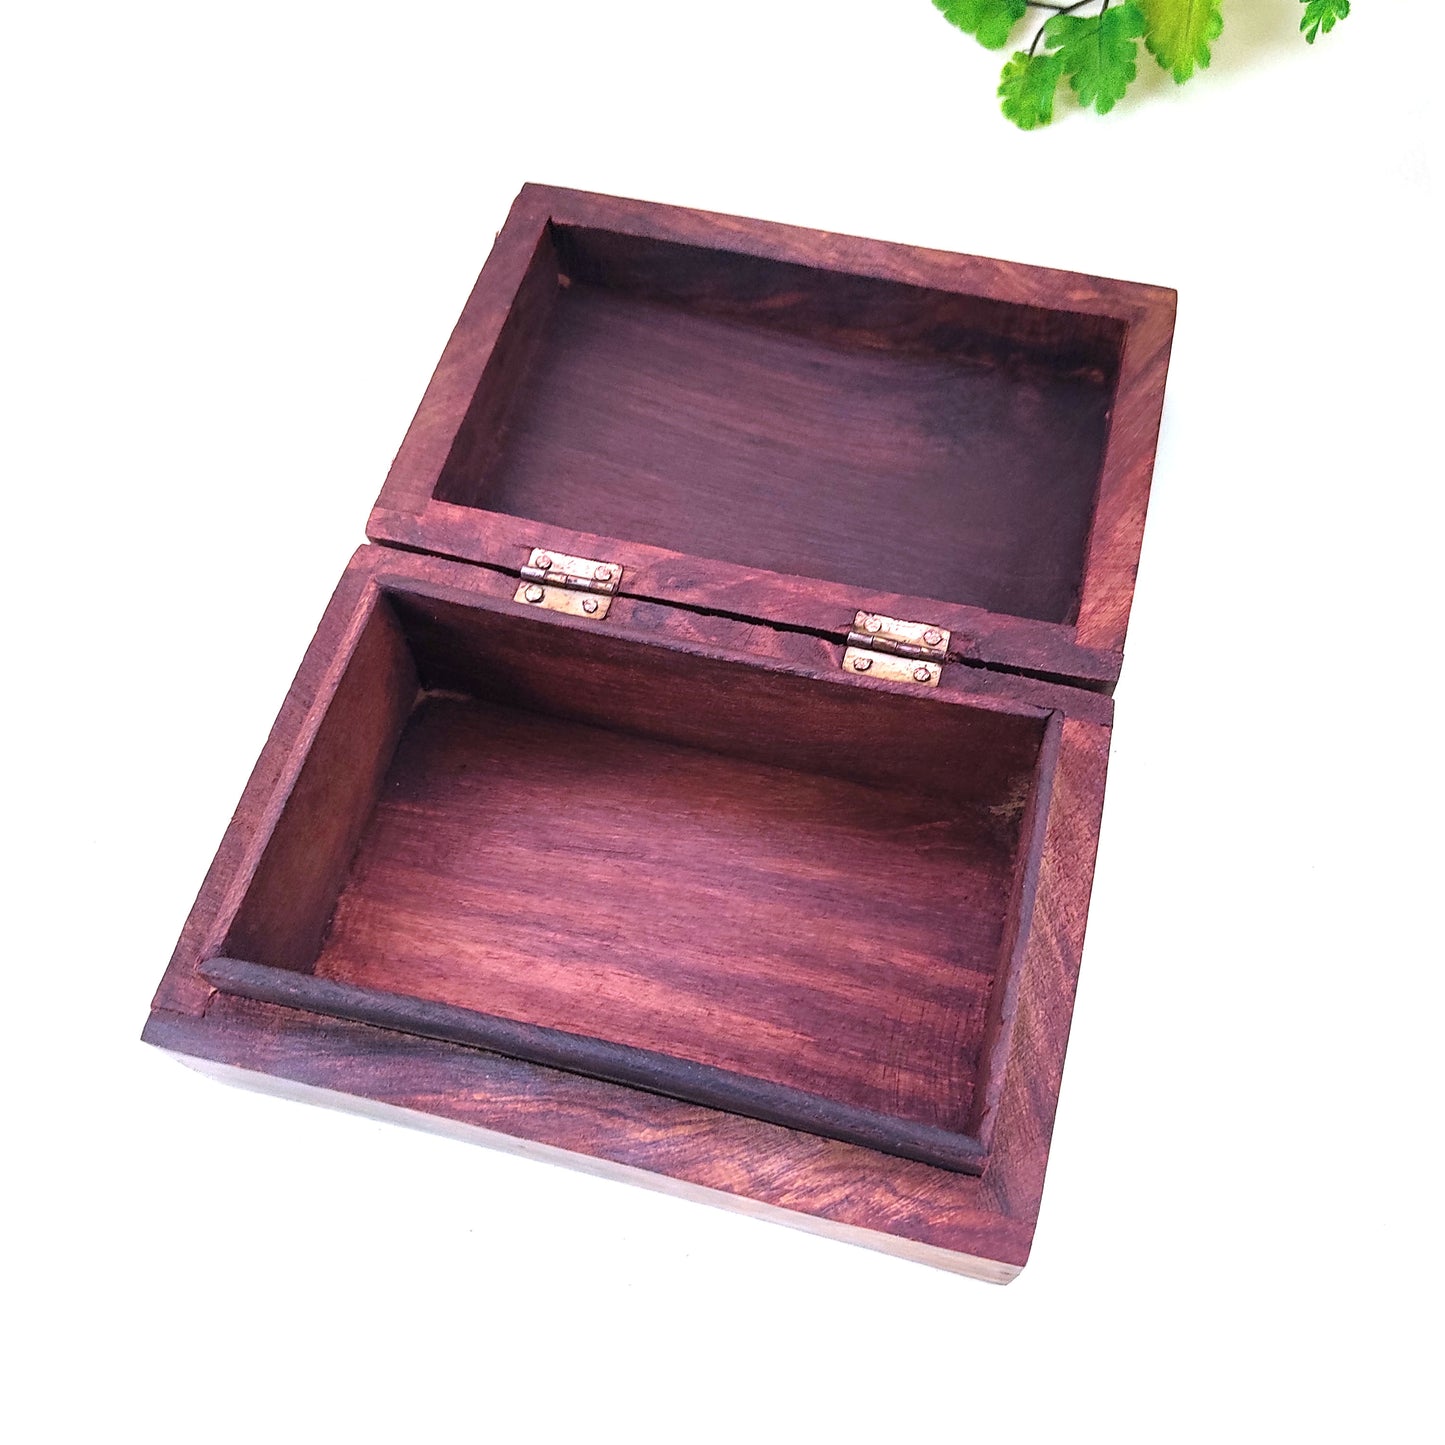 Goddess of Earth Wooden Handmade Altar Box | Goddess Jewelry Box 4"x 6"